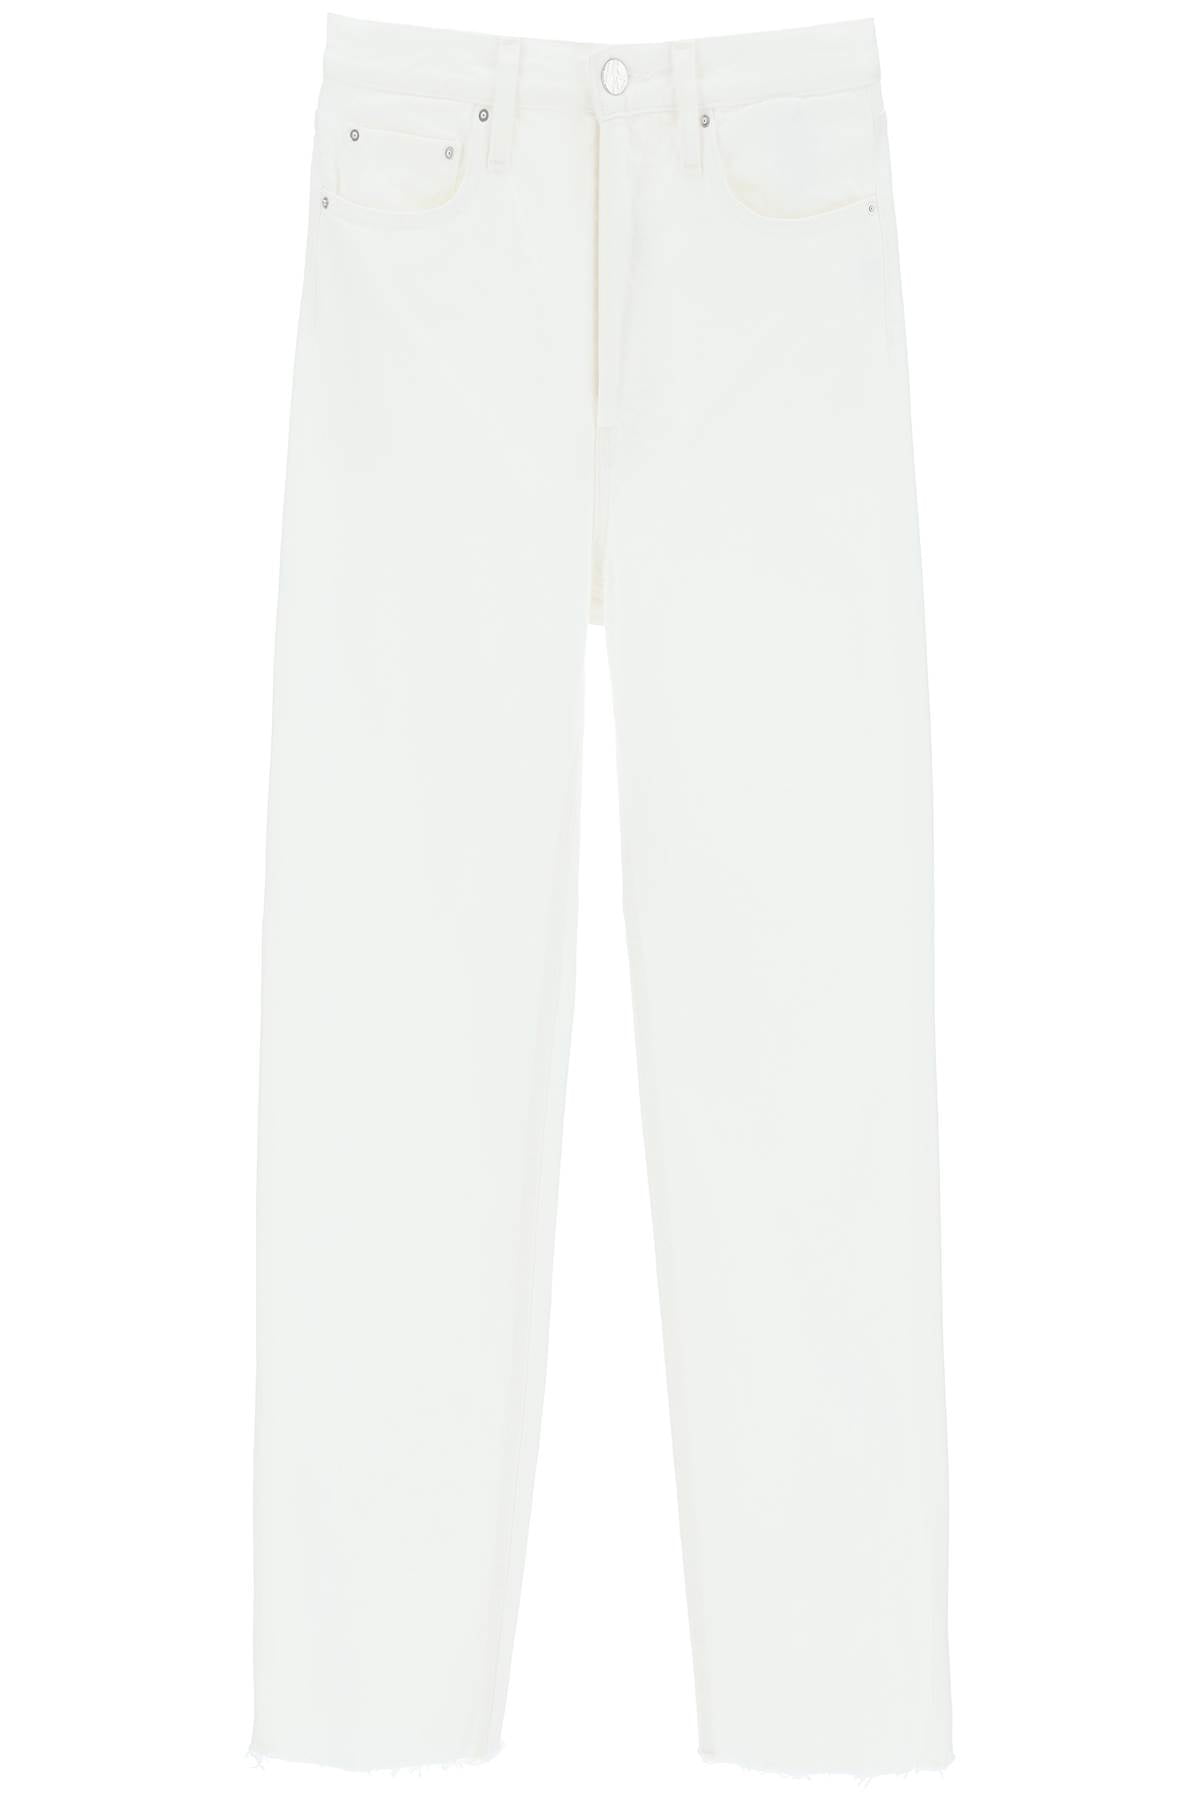 Toteme classic cut jeans in organic cotton - Walmart.com